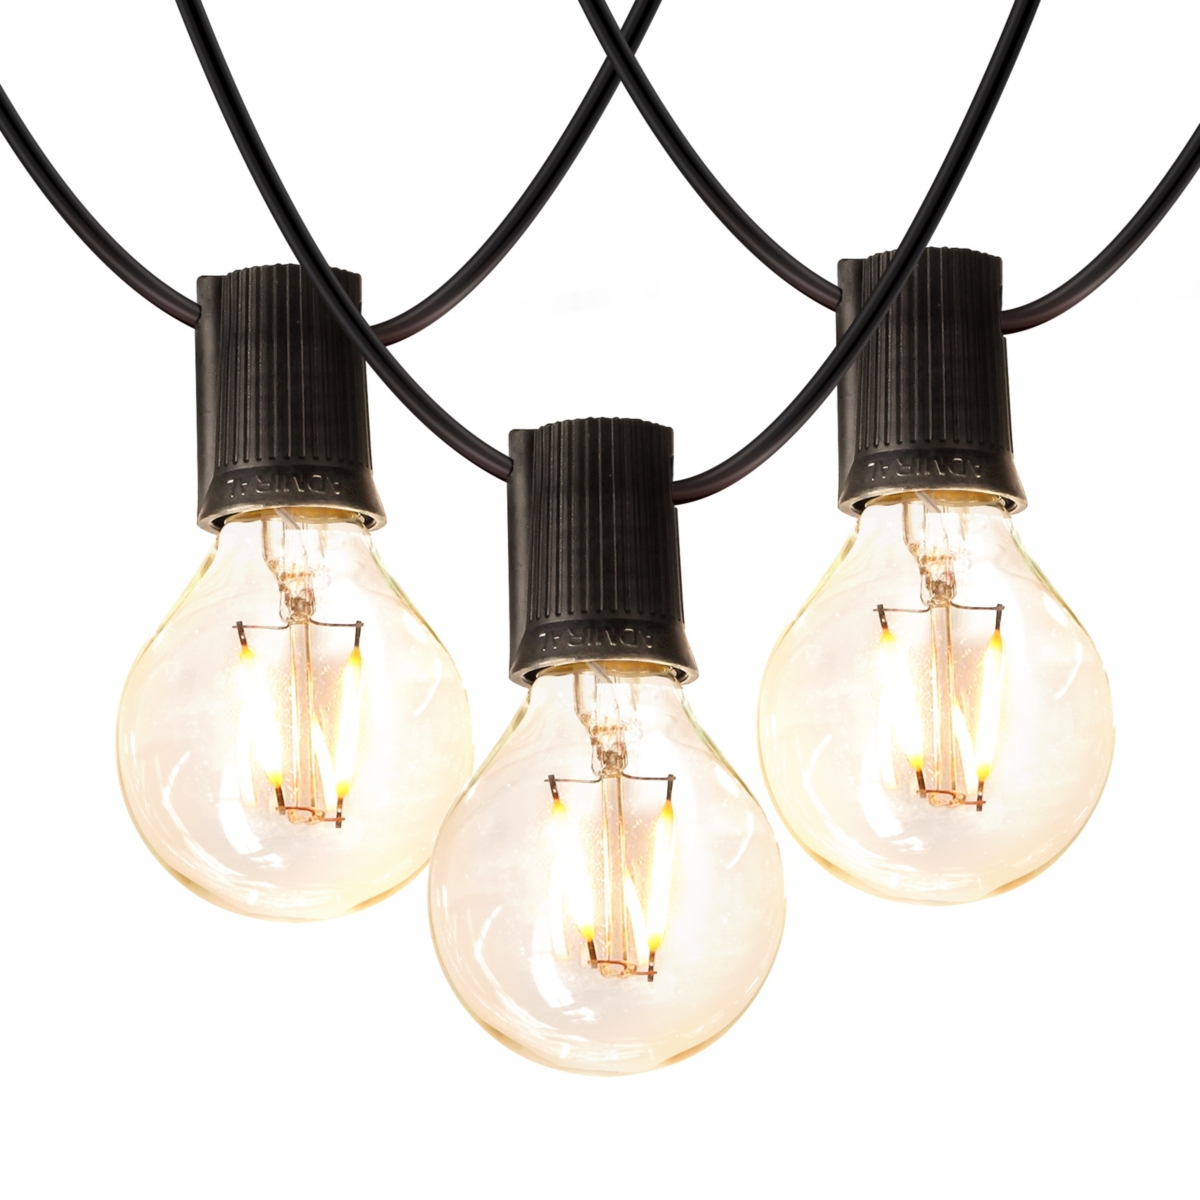 Weatherproof Led Holiday String Lights - 12 Glass Bulbs, 24 Ft, Black Cord - Classic black